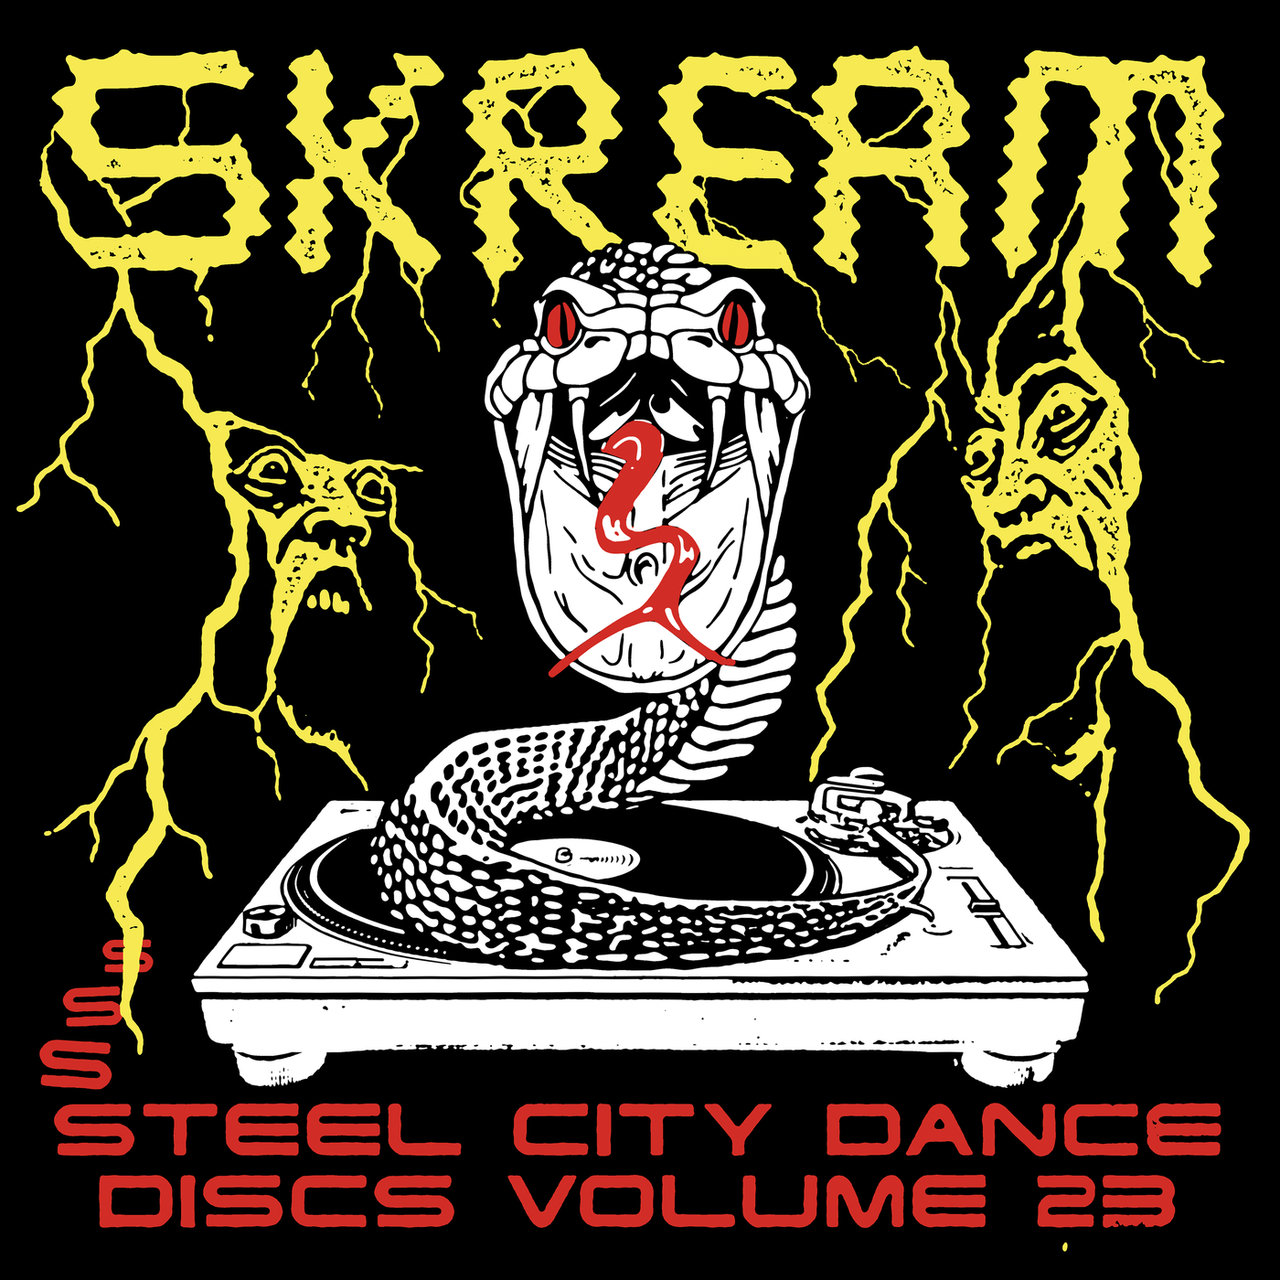 Download Steel City Dance Discs Volume 23 on Electrobuzz